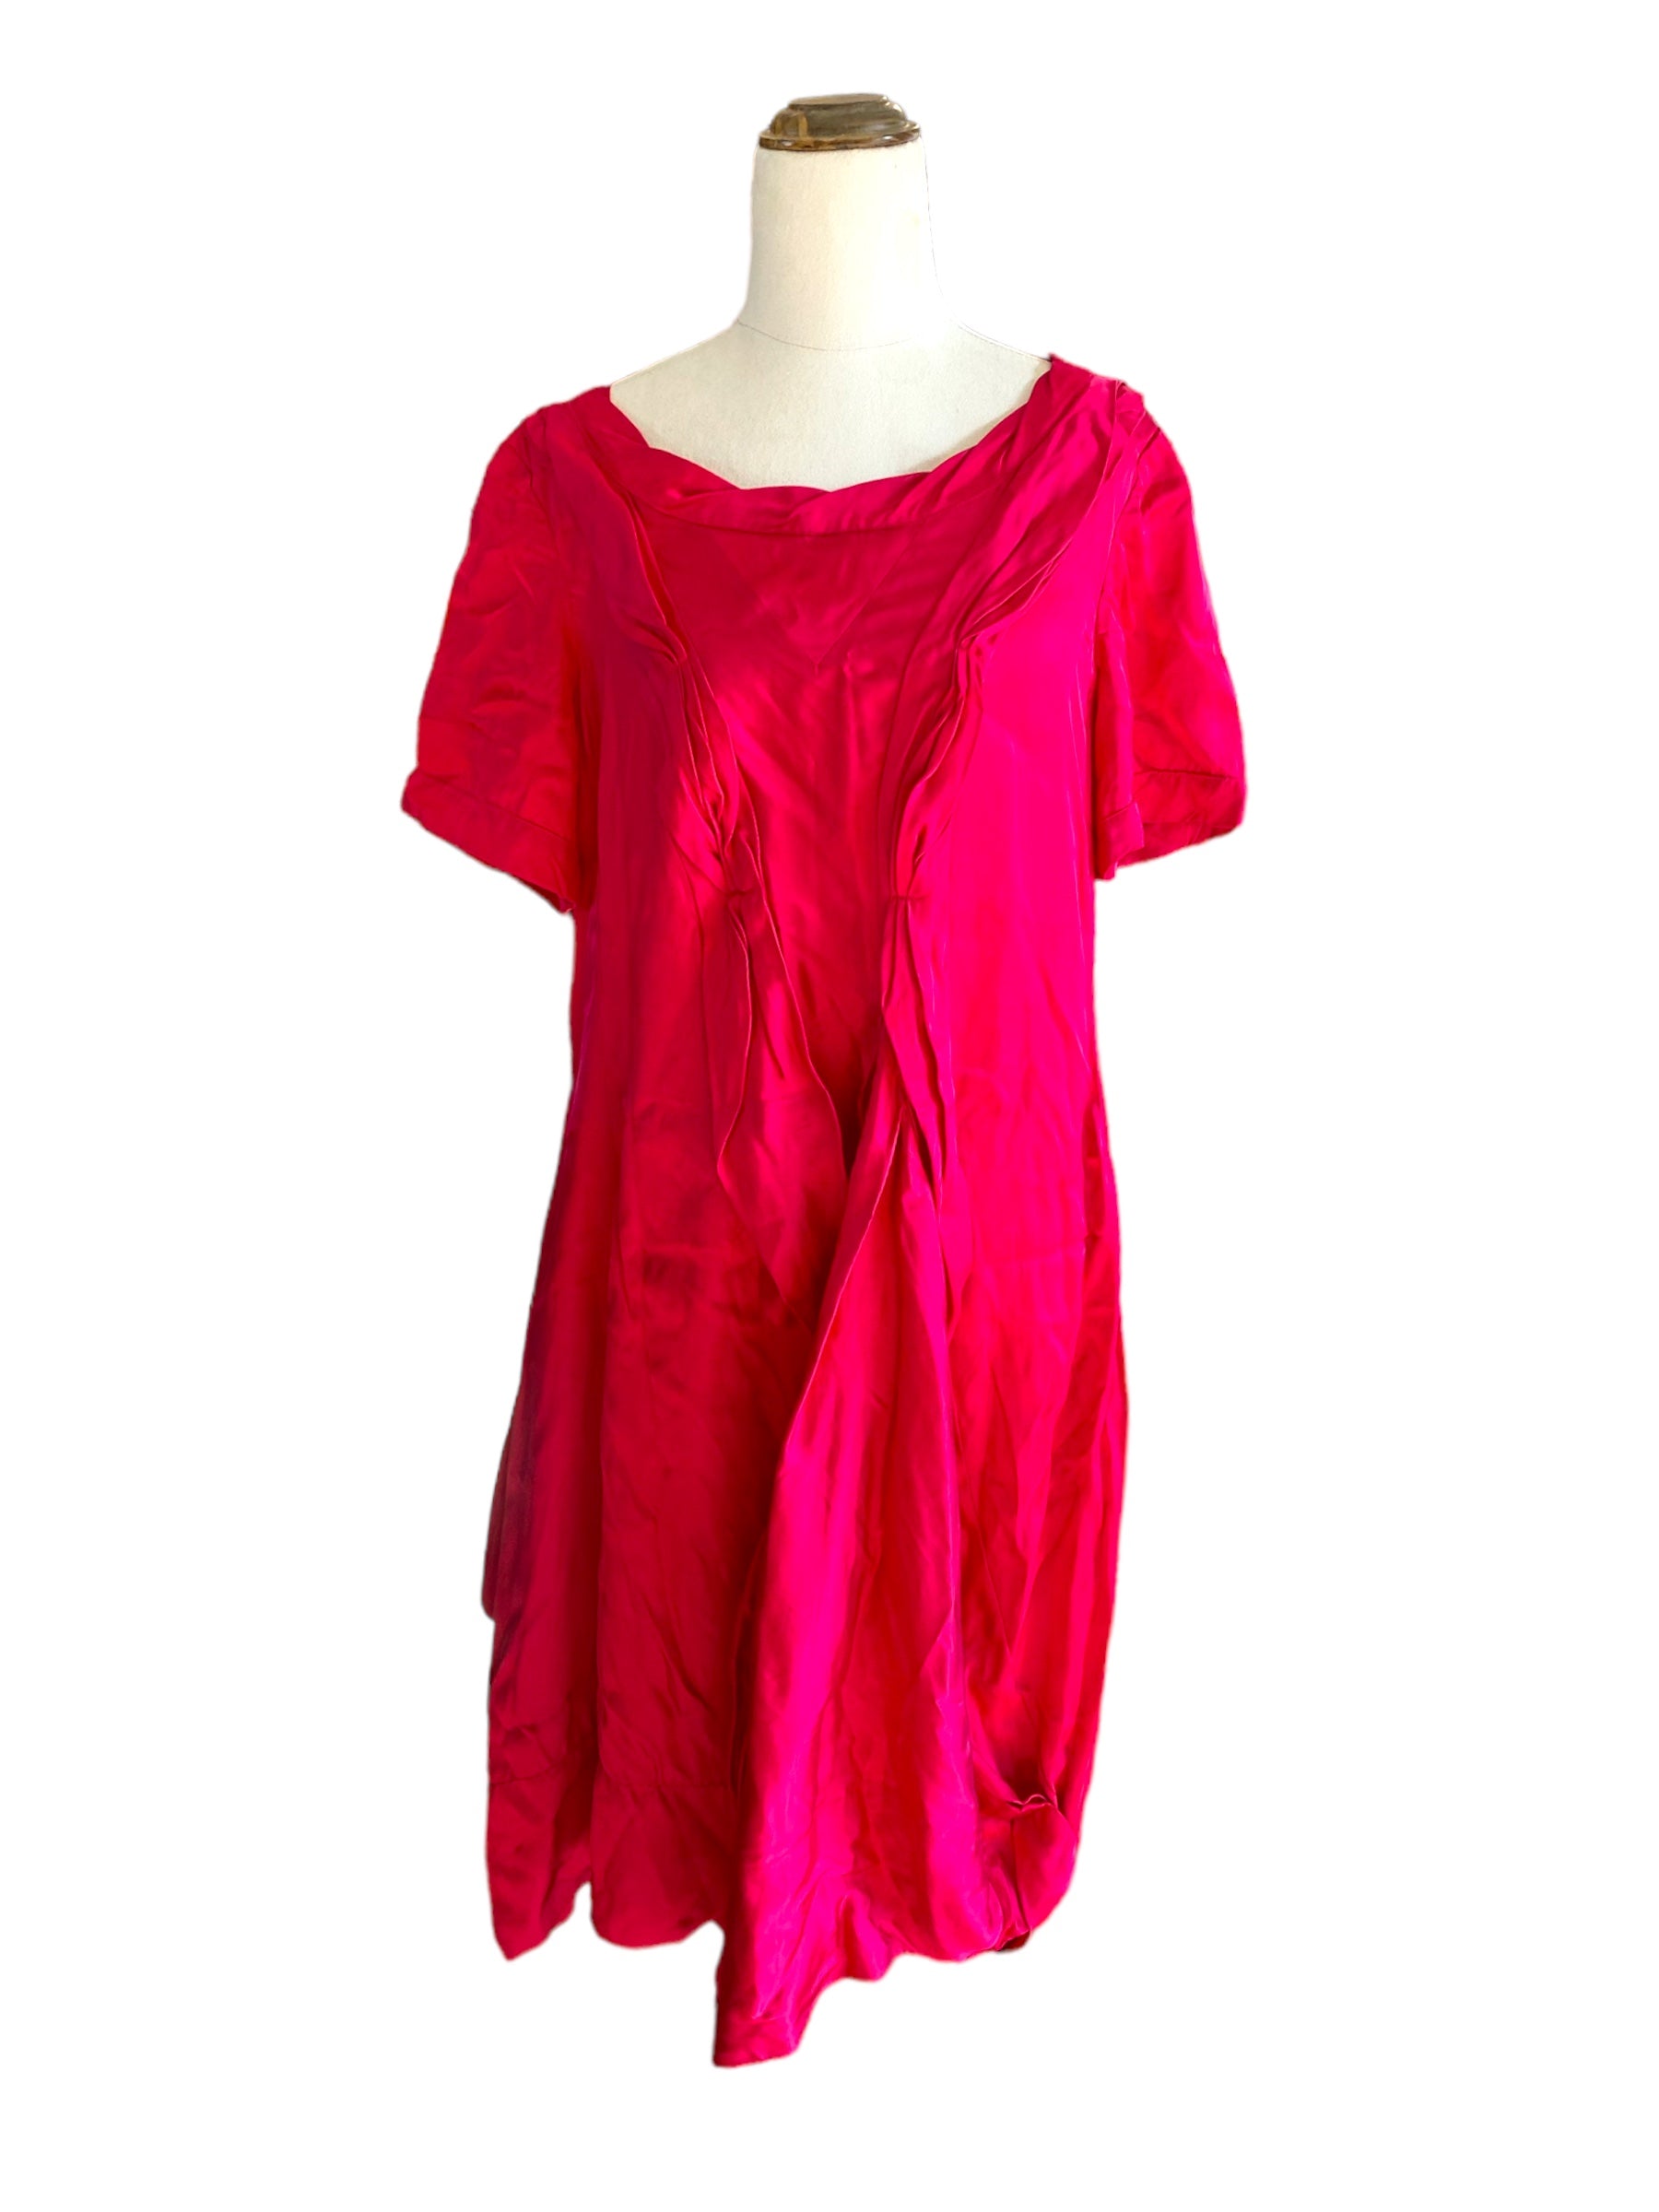 Trelise Cooper Pink Dress | Size 12